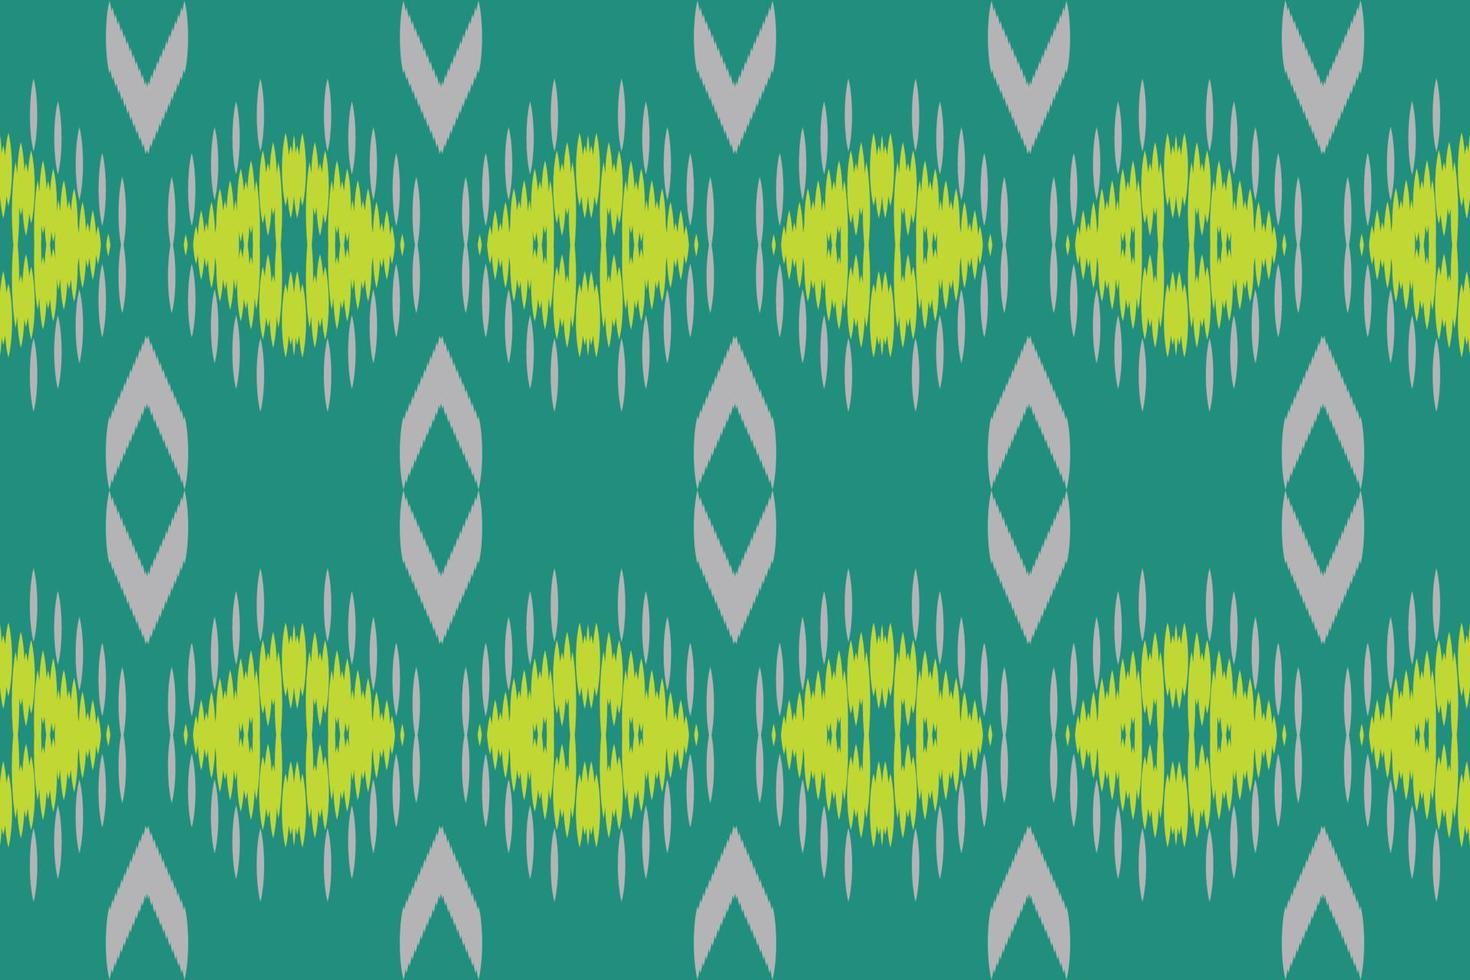 patrón ikat patrón abstracto tribal sin costuras. étnico geométrico ikkat batik vector digital diseño textil para estampados tela sari mughal cepillo símbolo franjas textura kurti kurtis kurtas